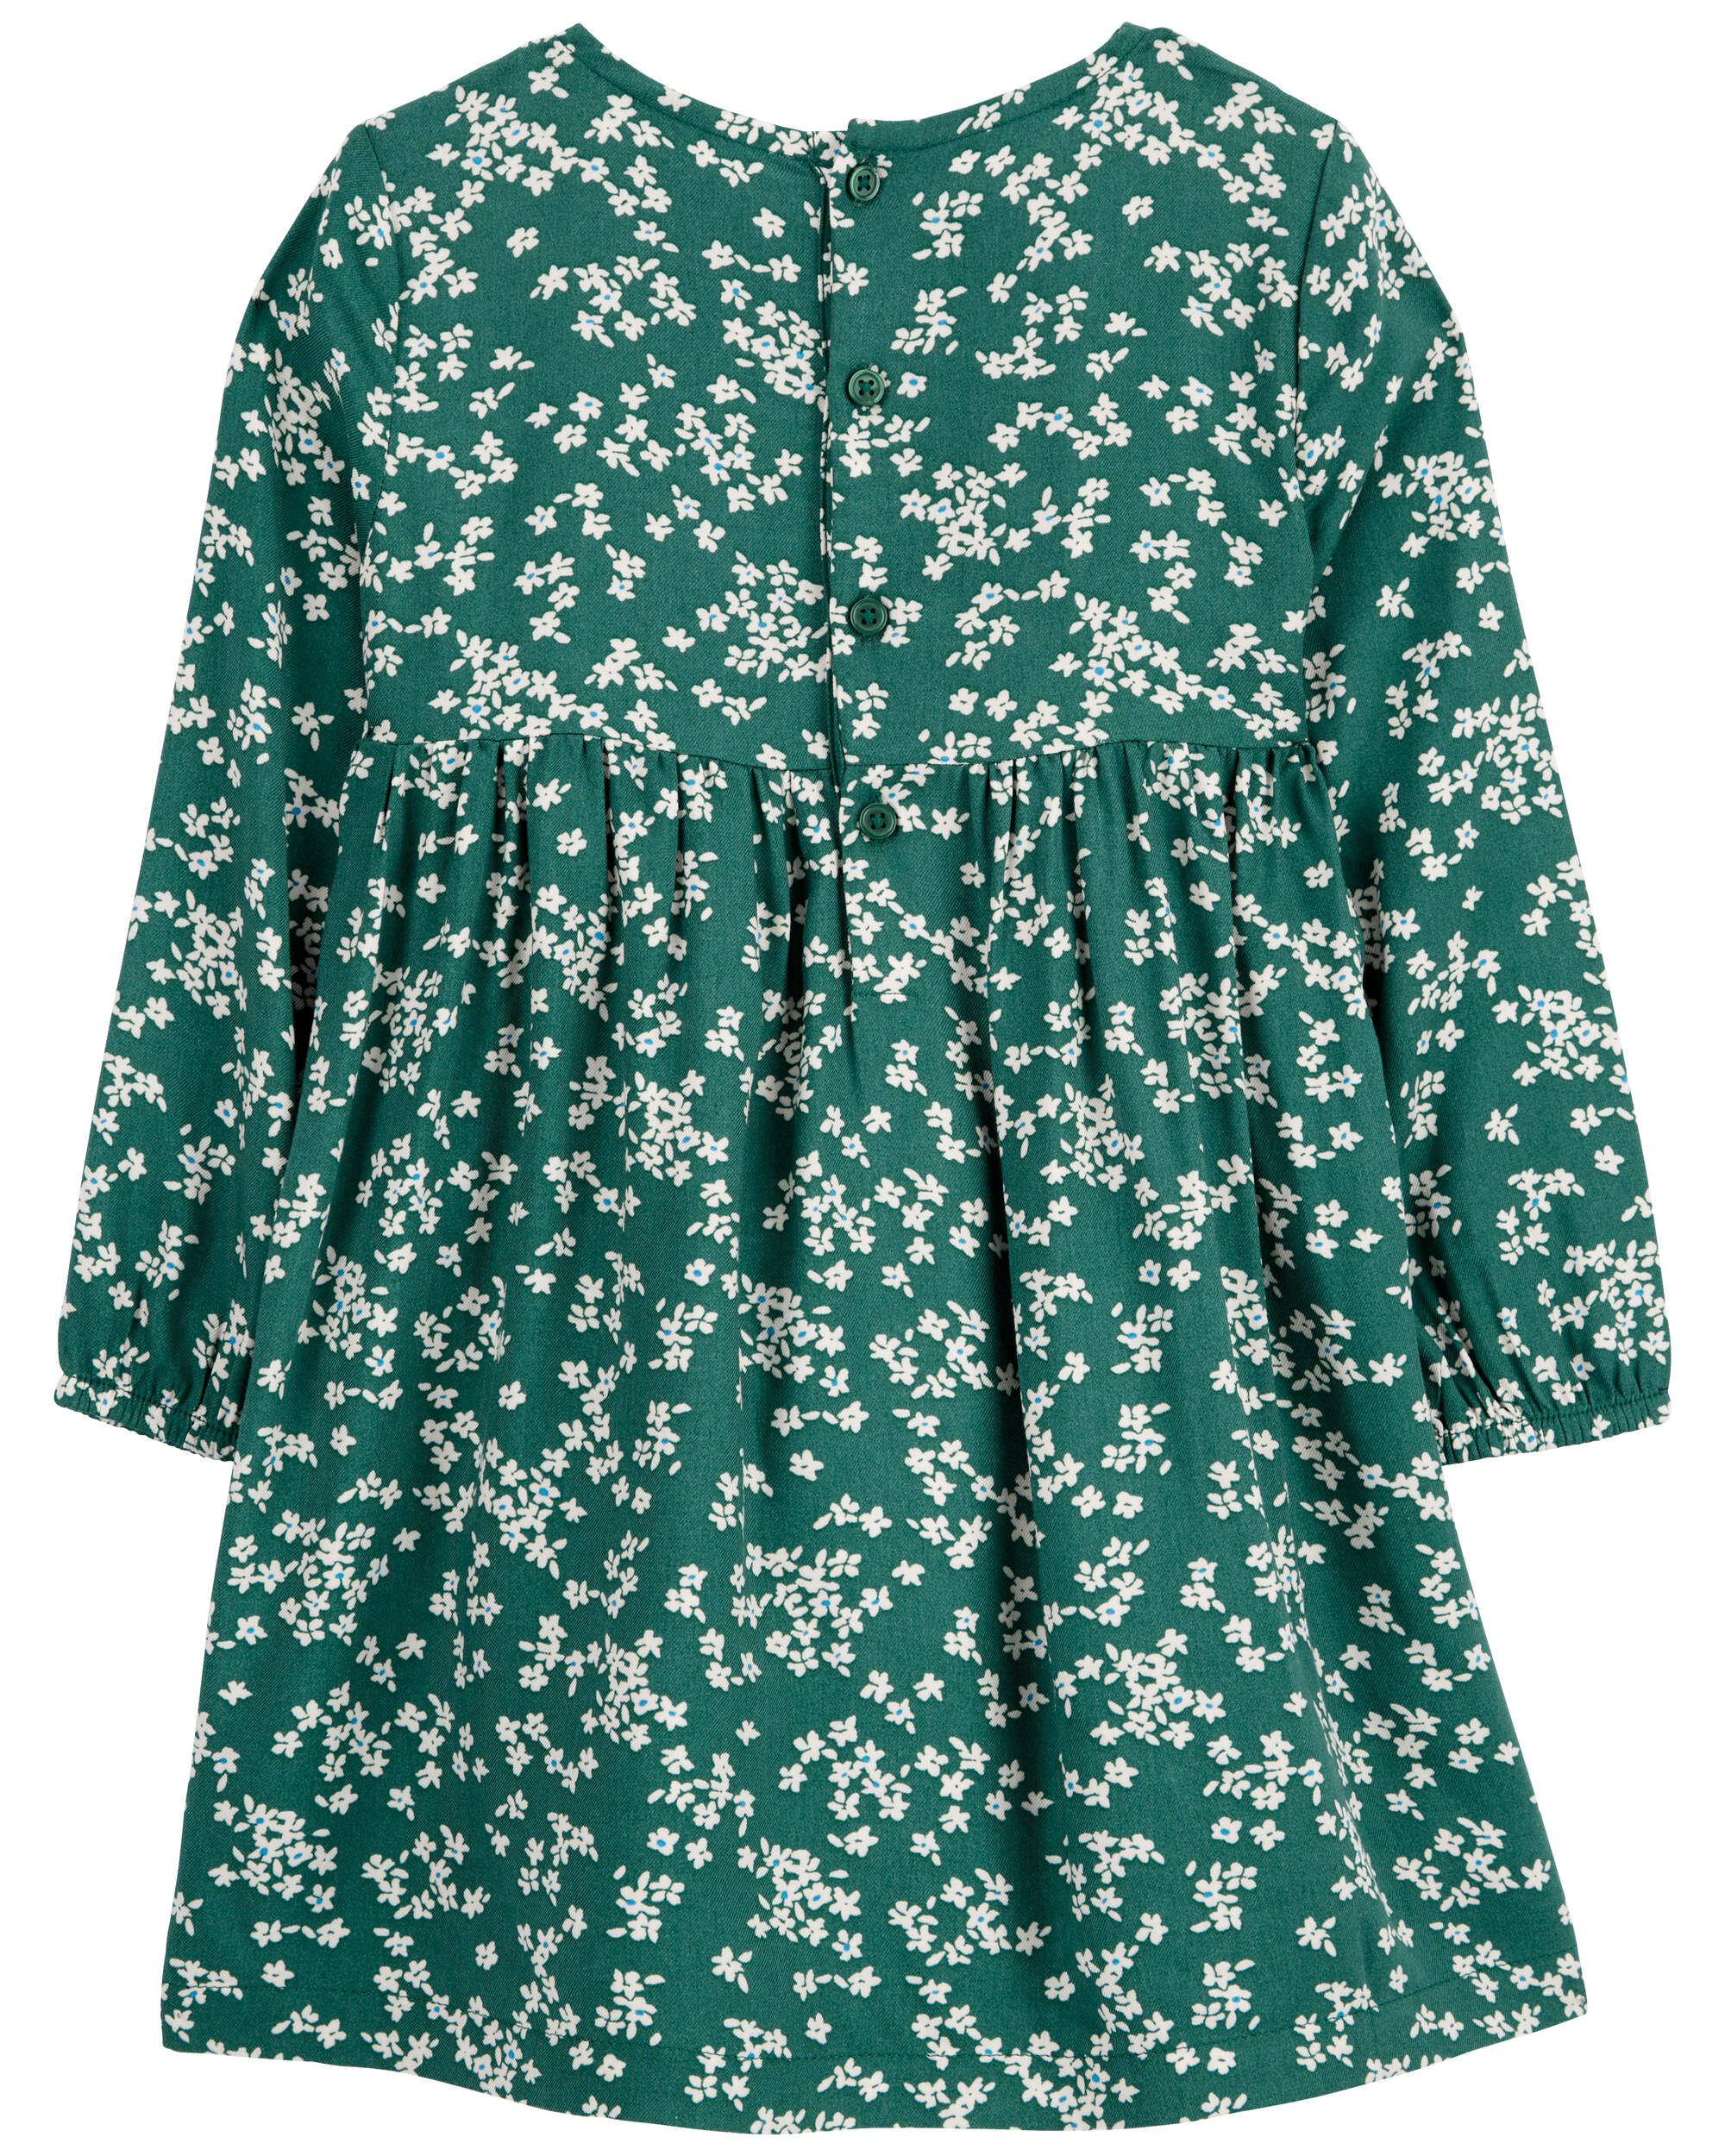 Toddler Floral Long-Sleeve Dress